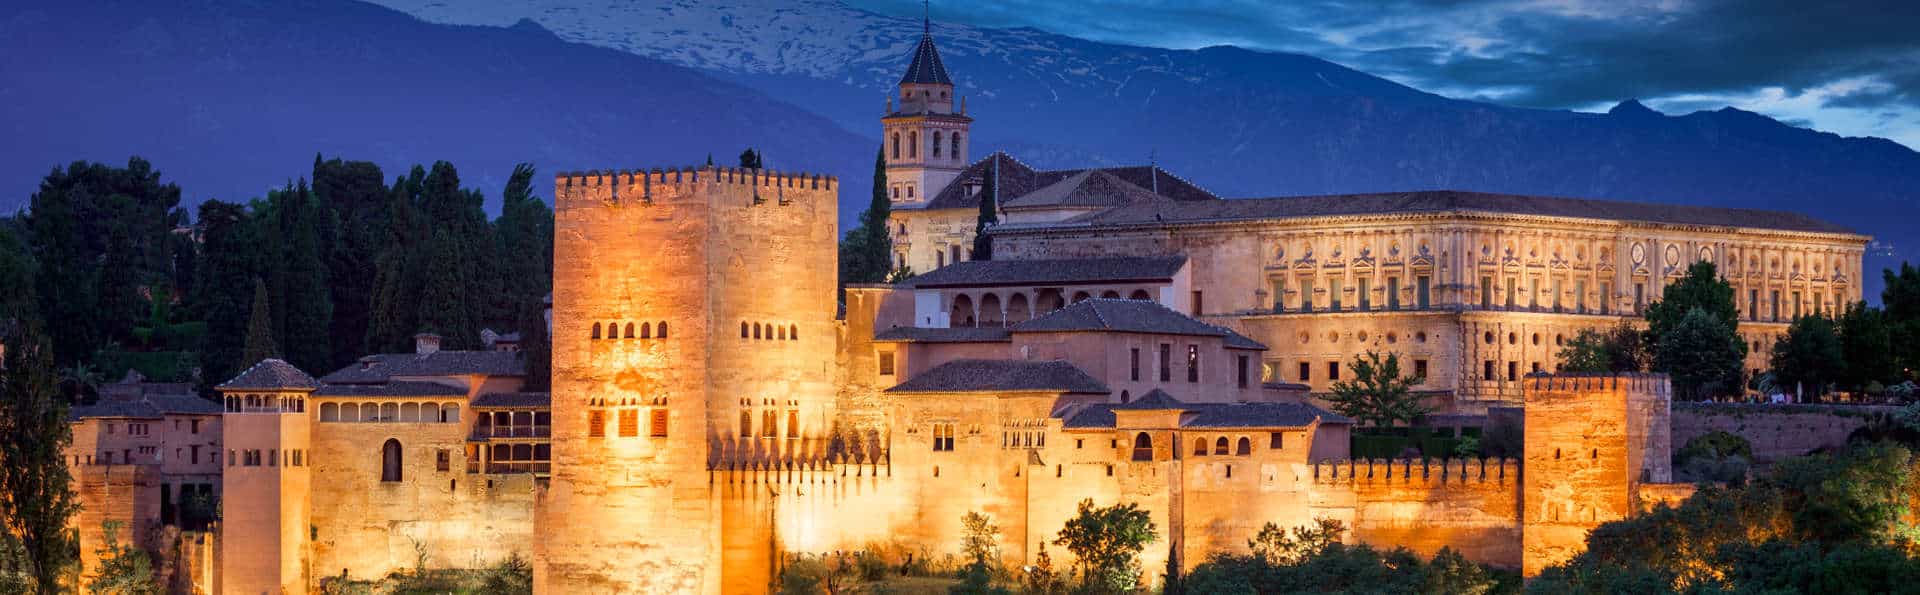 Granada Alhambra Vanbreak